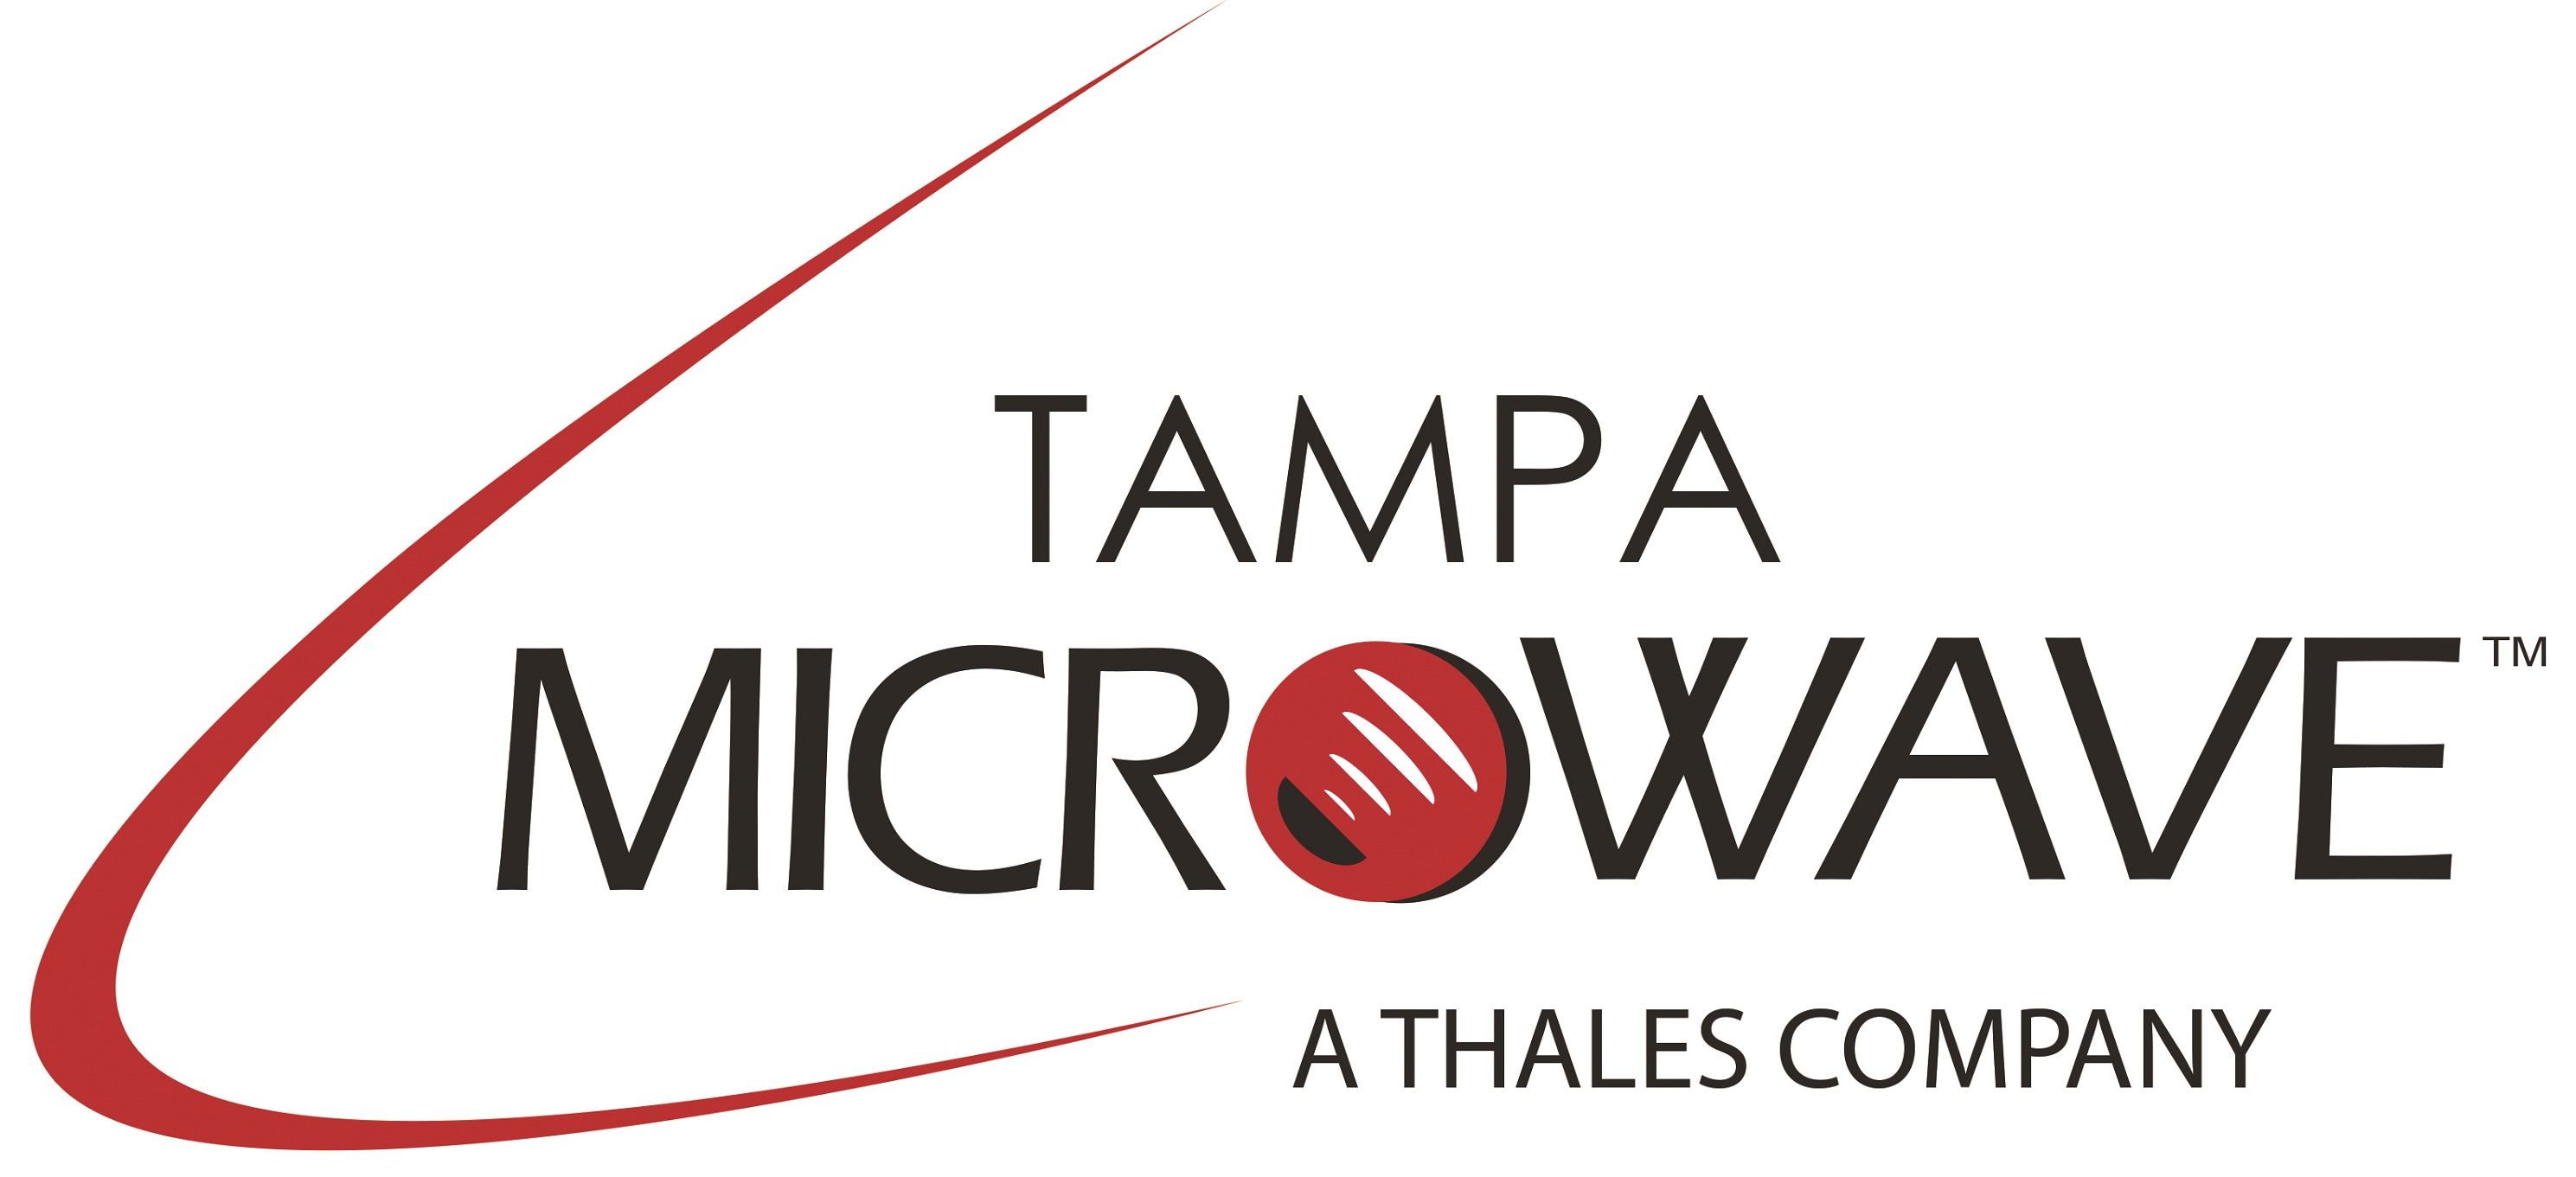 Tampa Microwave